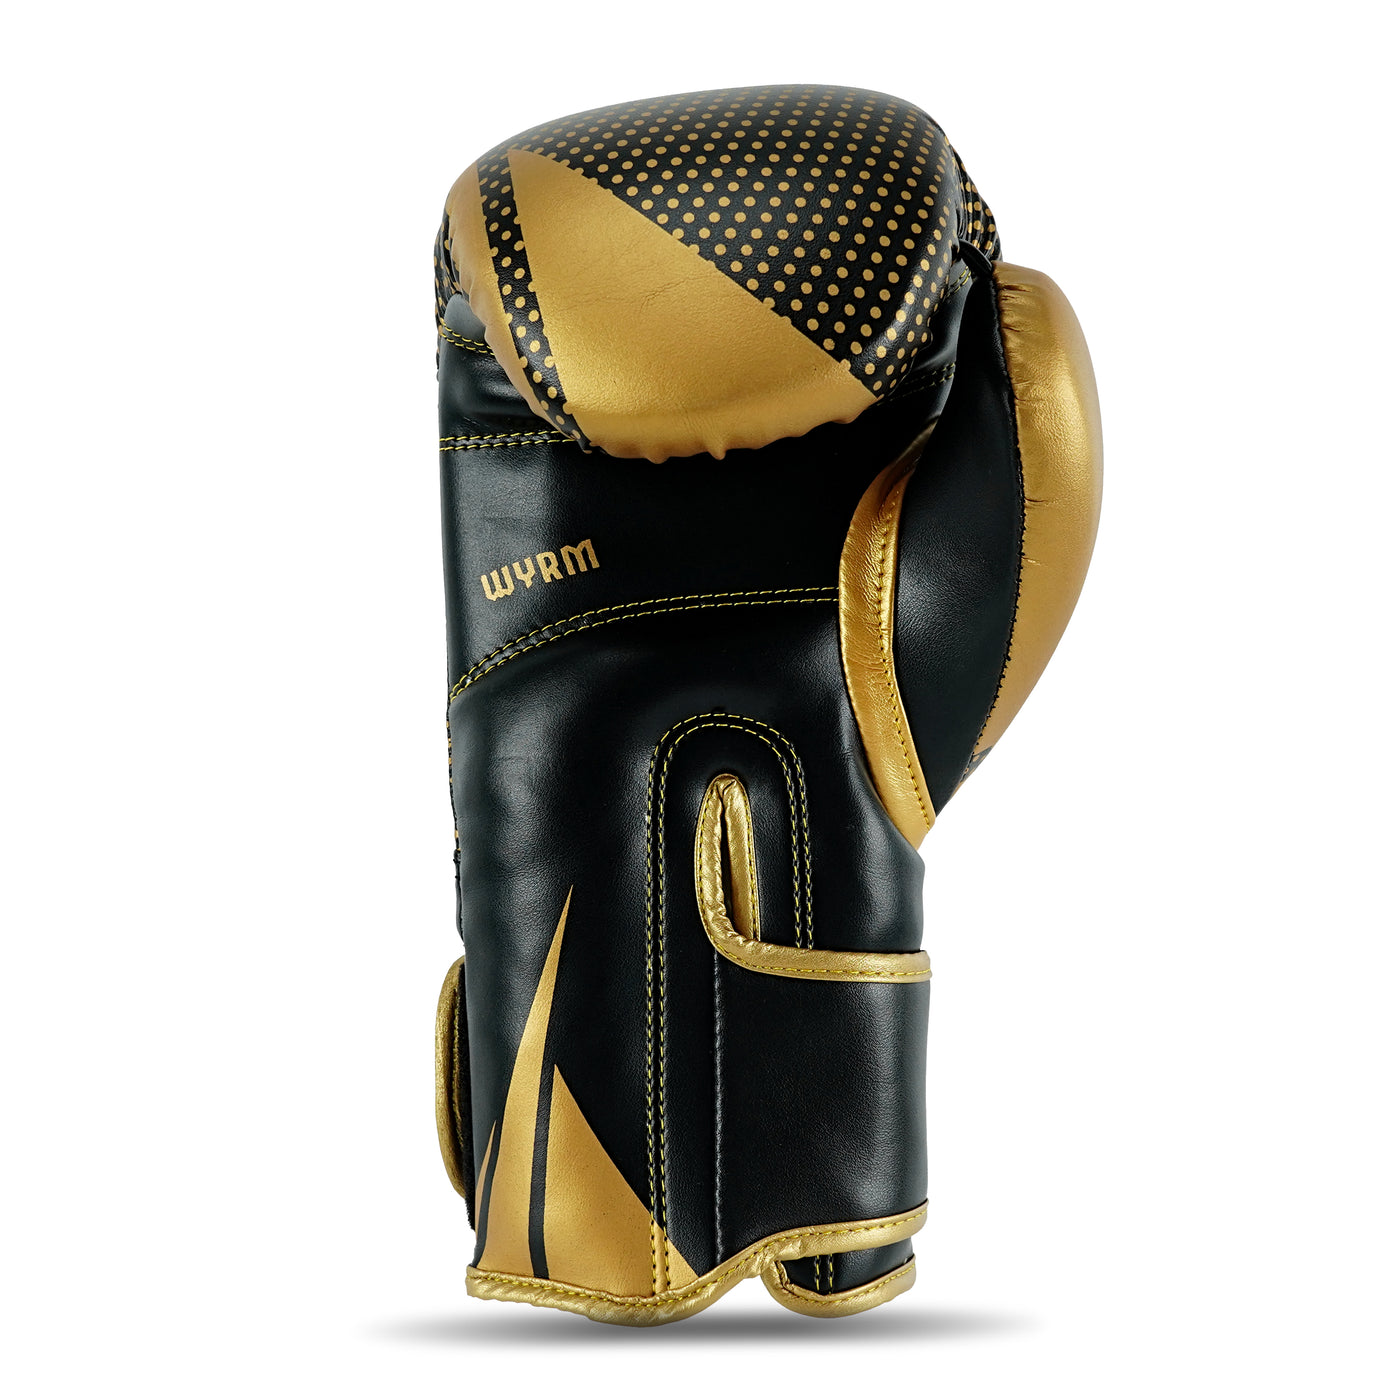 Krusher Gold/Black Leather Boxing Gloves